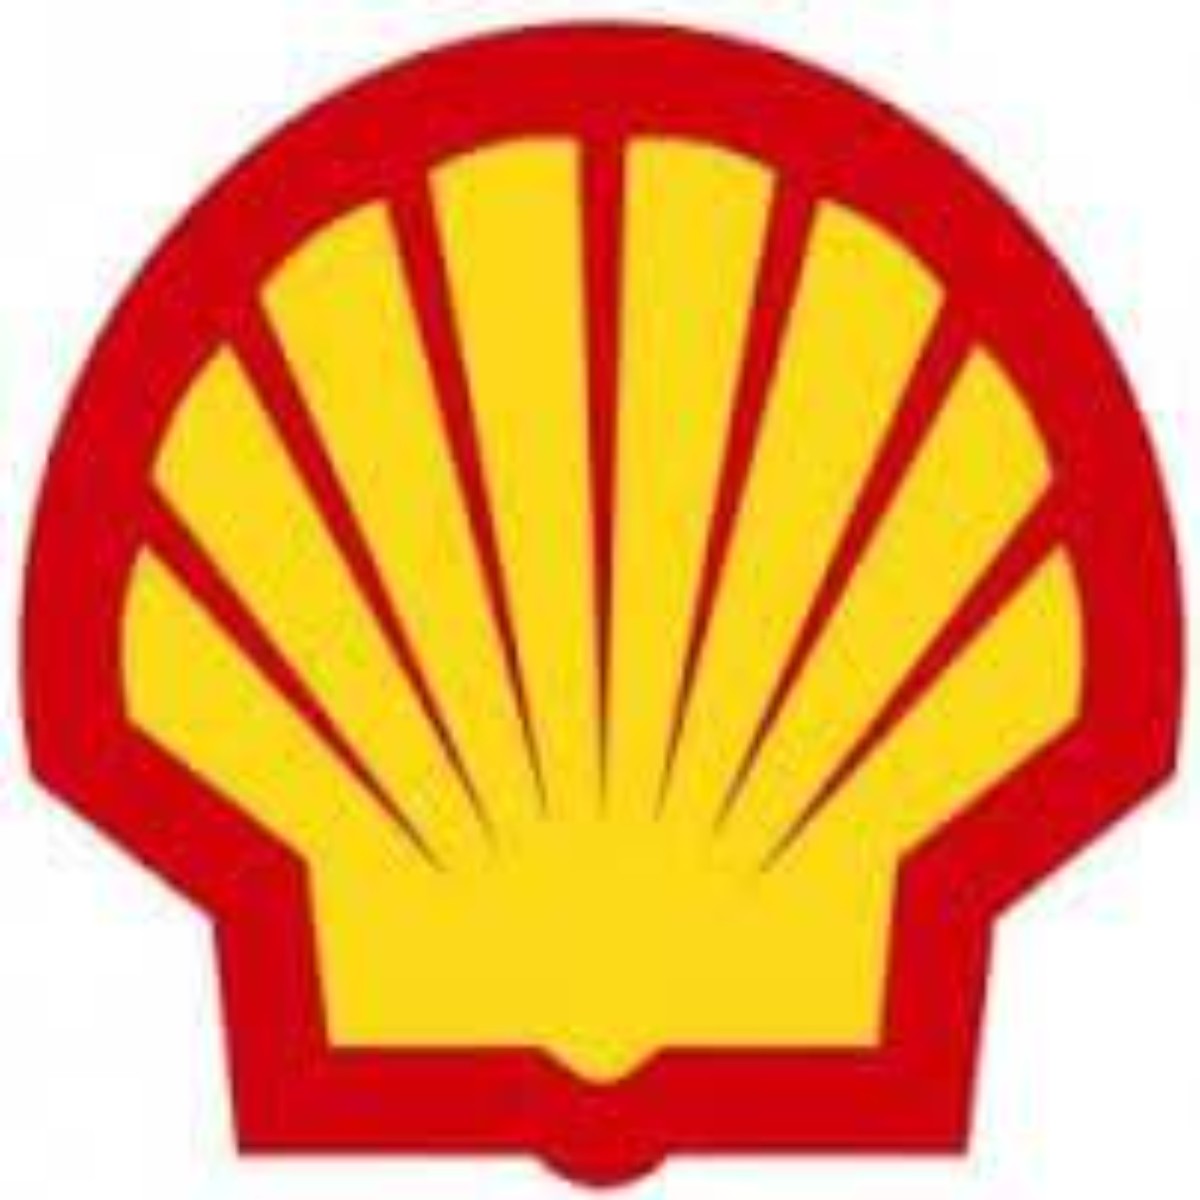 Shell 2023 Graduate Programme for Nigerian Graduates